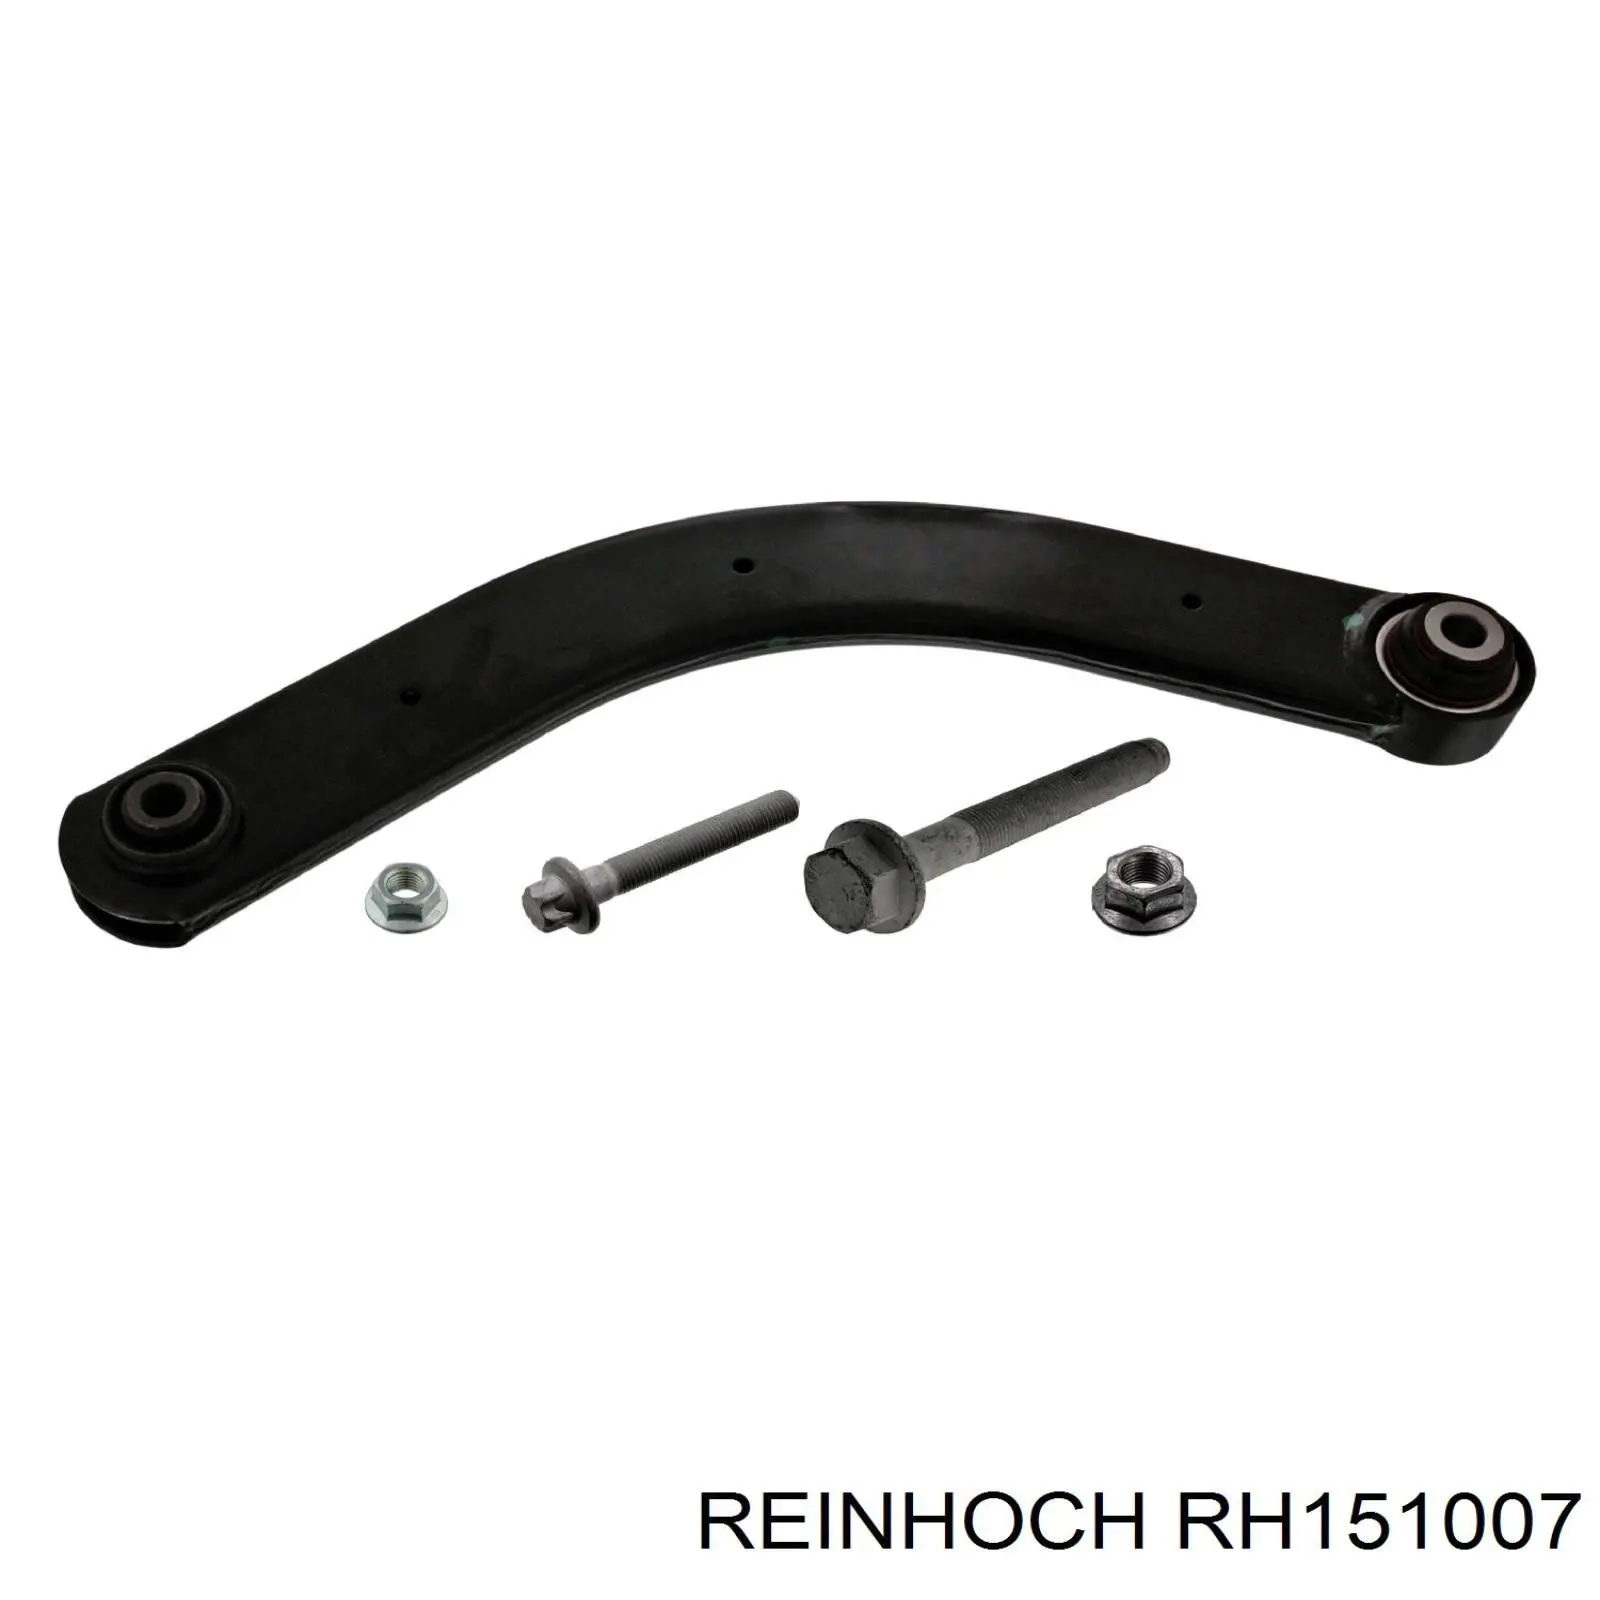 RH151007 Reinhoch 